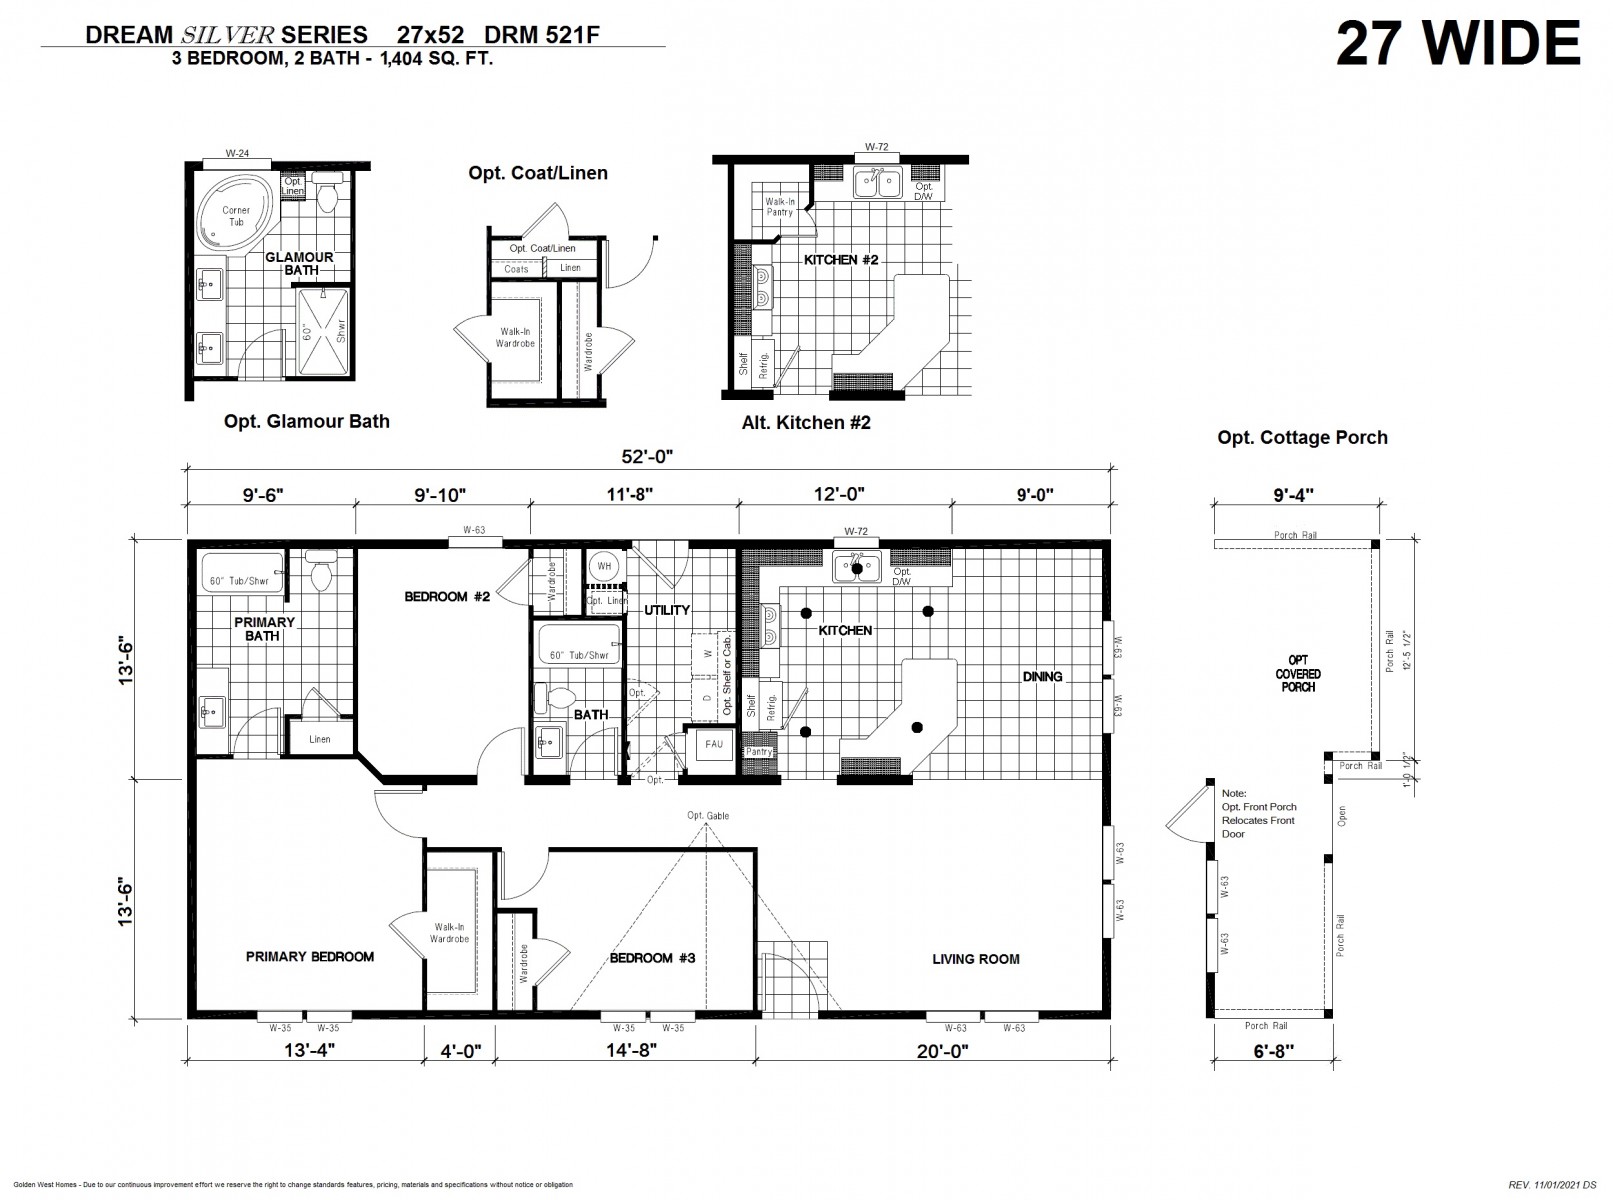 Homes Direct Modular Homes - Model DRM521F - Floorplan